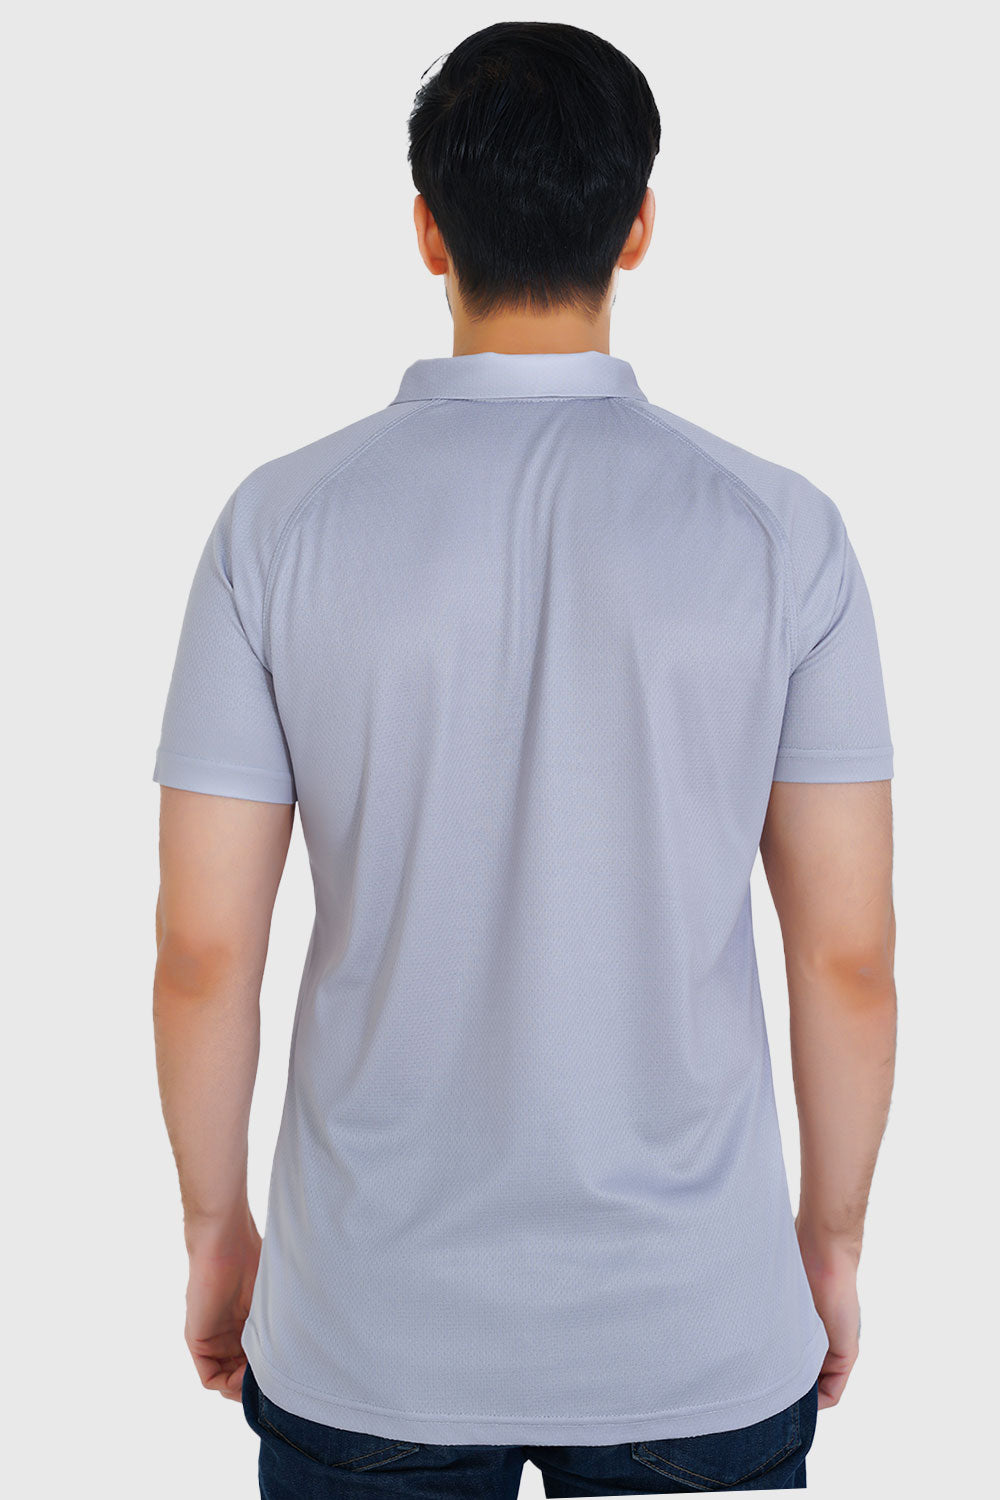 ZALMI Premium Polo Shirt (Grey)